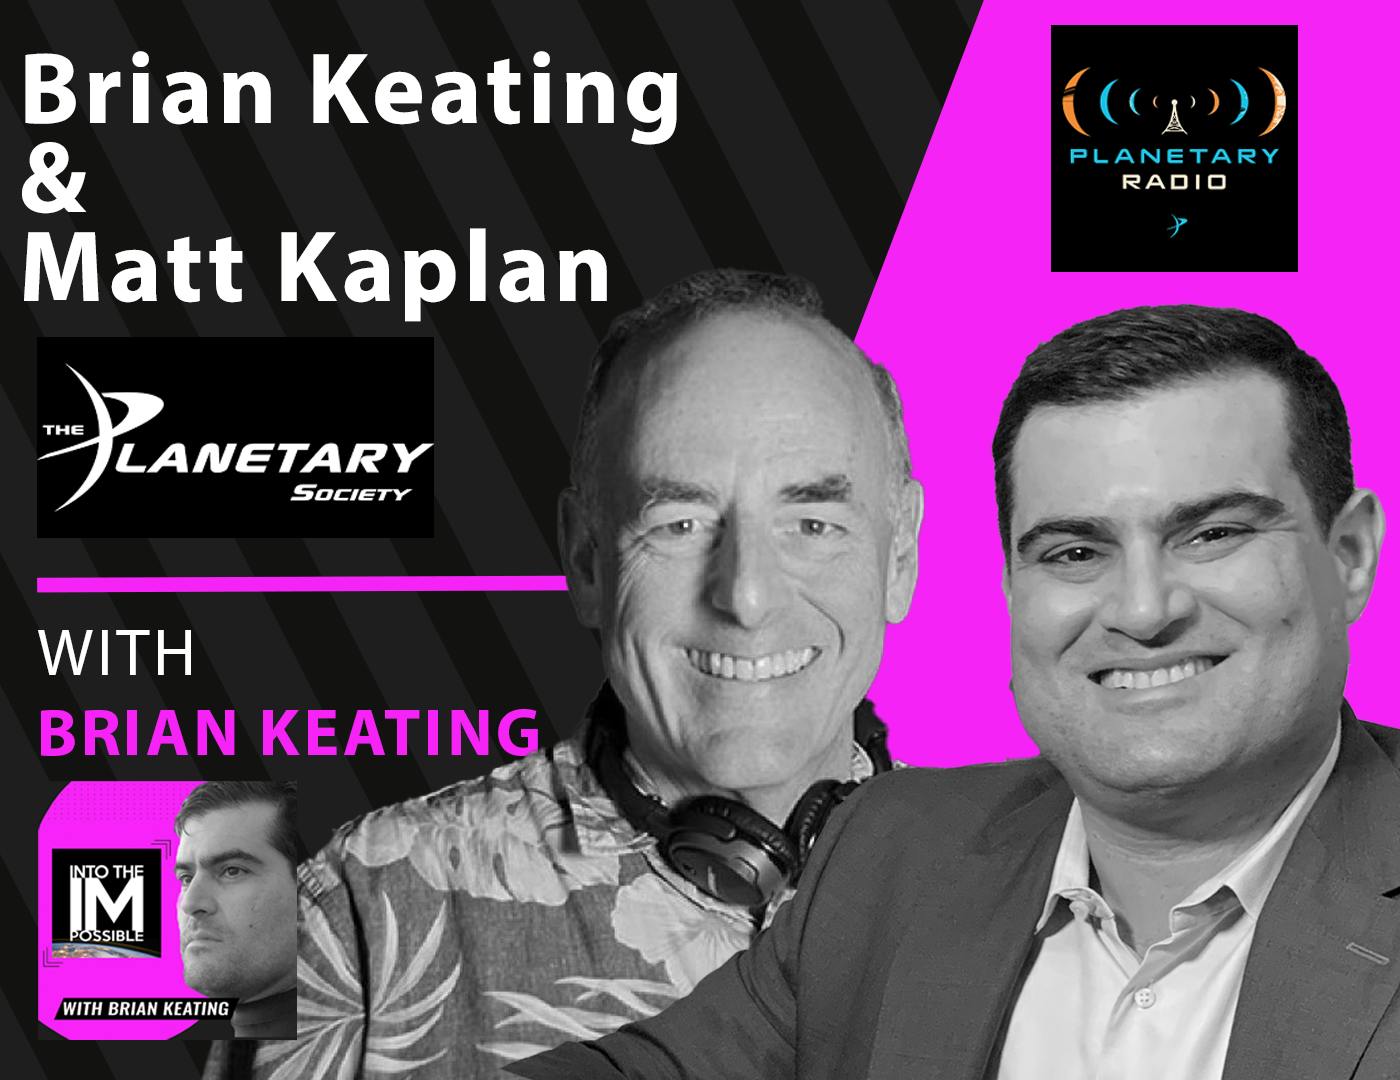 Brian Keating on Planetary Radio with Host Matt Kaplan: Special Crossover Episode (#161)